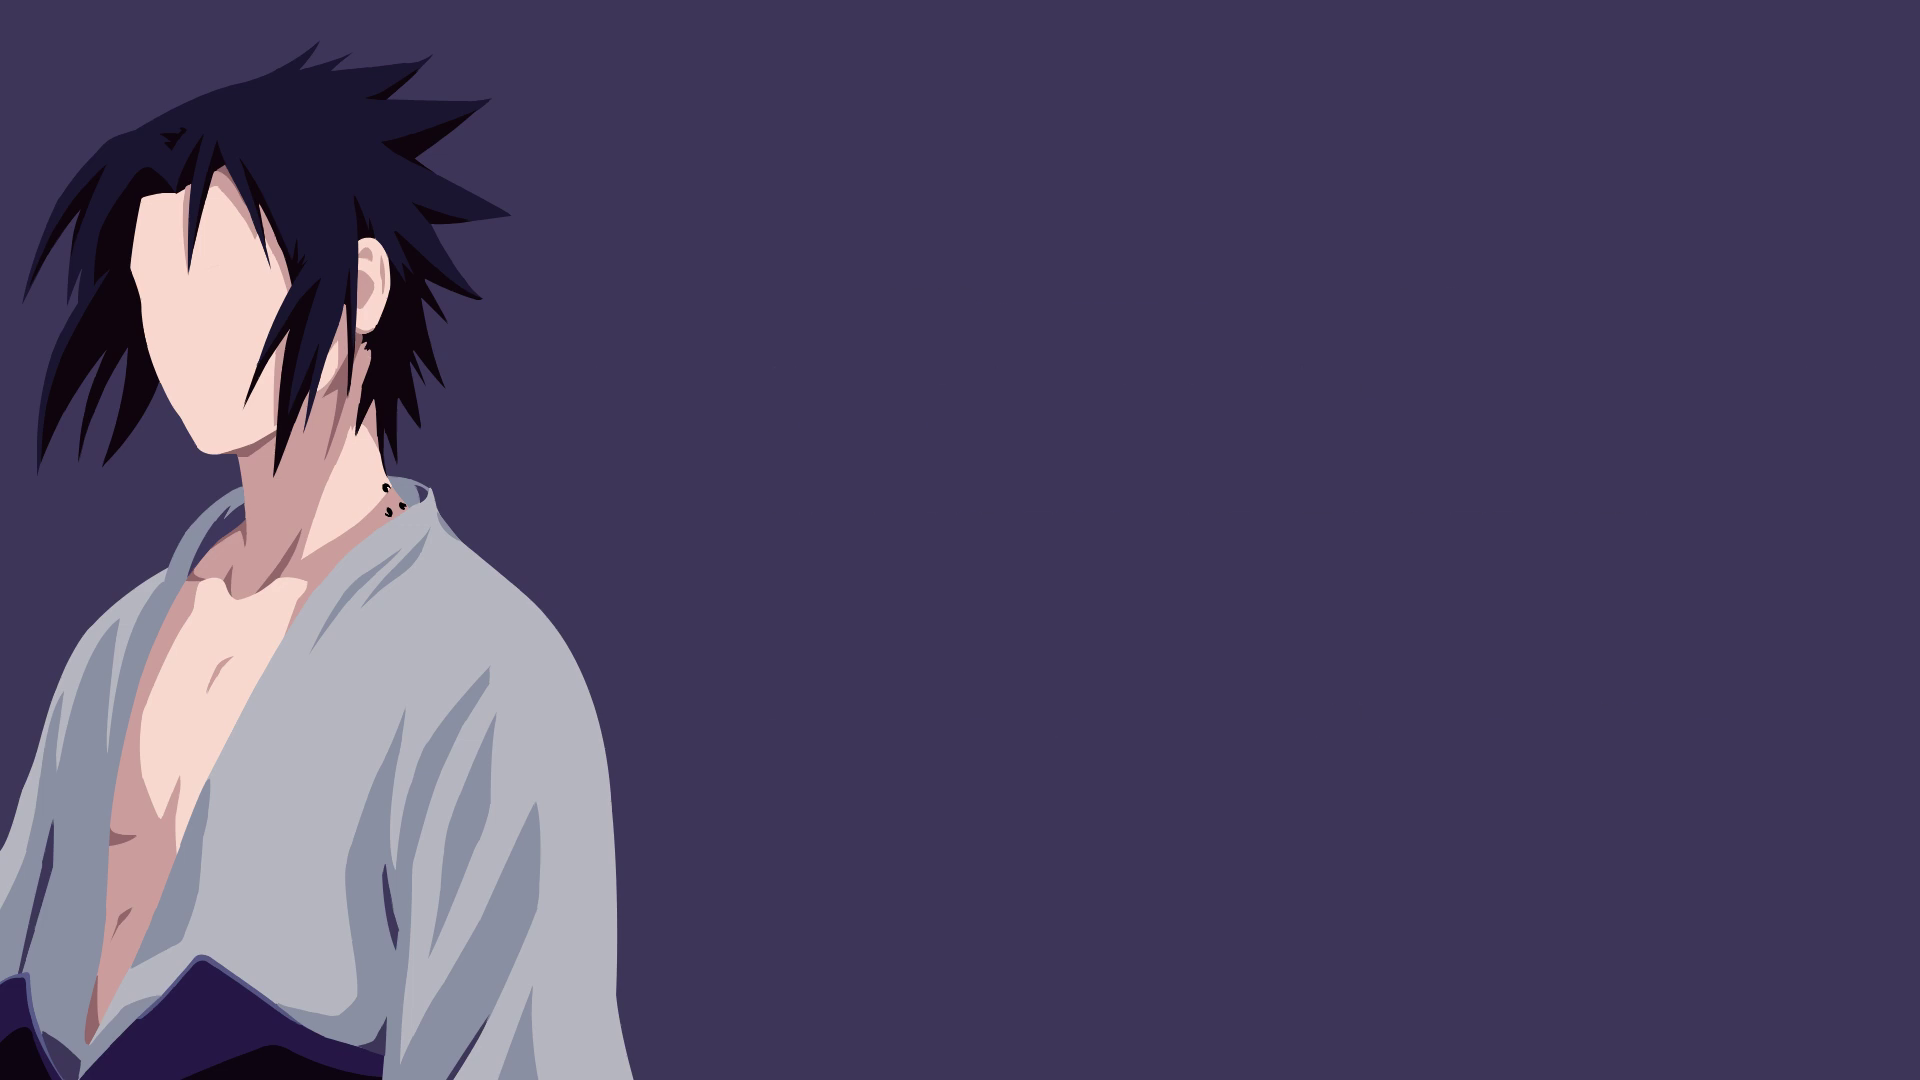 Uchiha Sasuke minimalist wallpaper, Narutoreddit.com